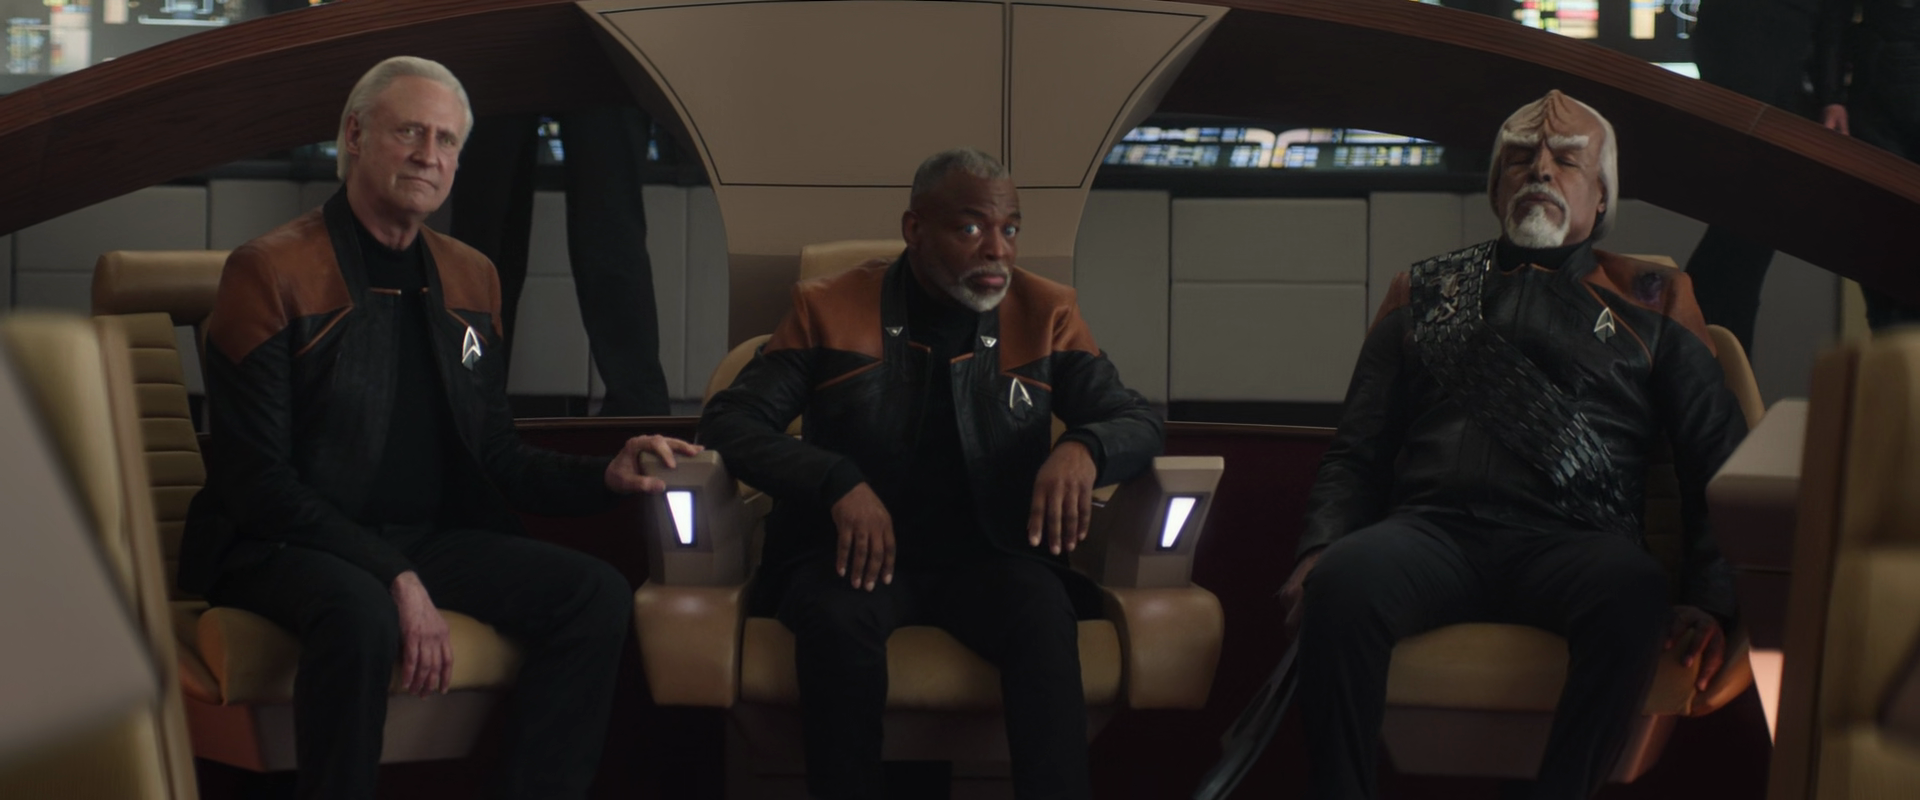 Data (Brent Spiner), Geordi La Forge (LeVar Burton), and Worf (Michael Dorn) take a moment of respite in Star Trek: Picard Season 3 Episode 10 "Et in Arcadia Ego: Part 2" (2023), Paramount